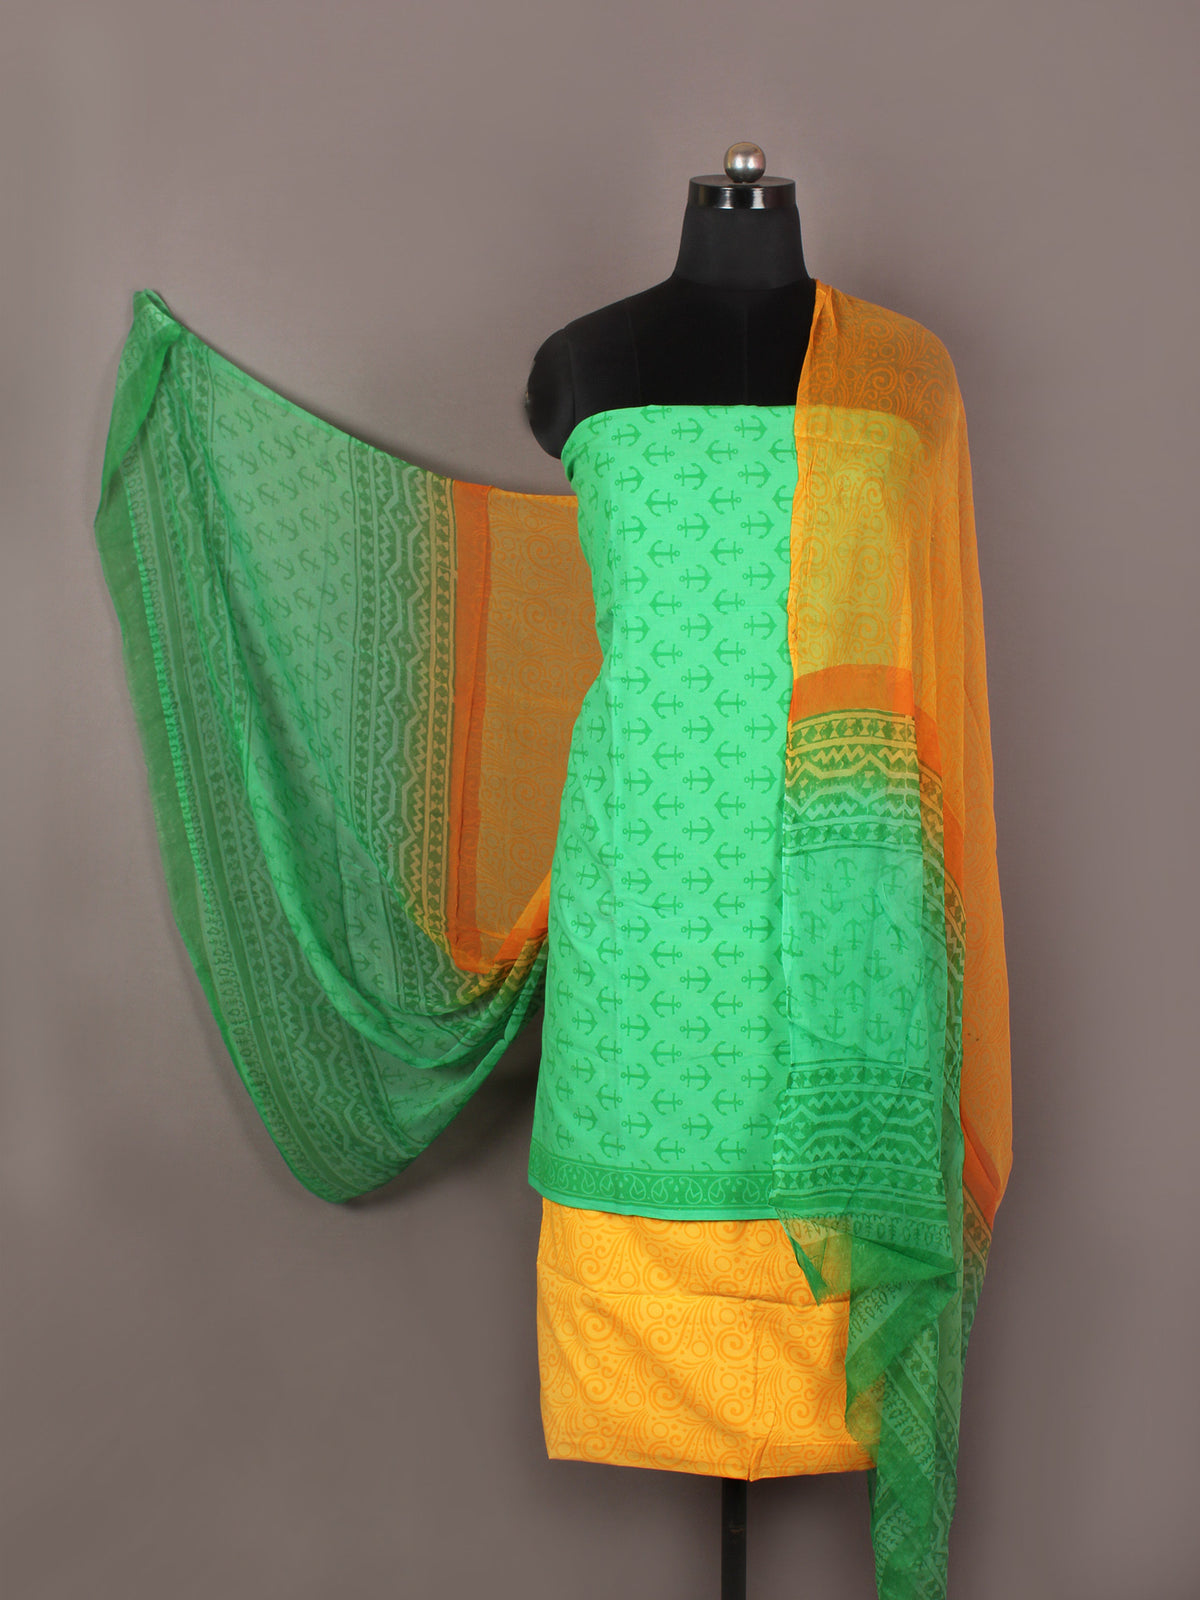 Seafoam Green Yellow Orange Hand Block Printed Cotton Suit-Salwar Fabric With Chiffon Dupatta - S1628168